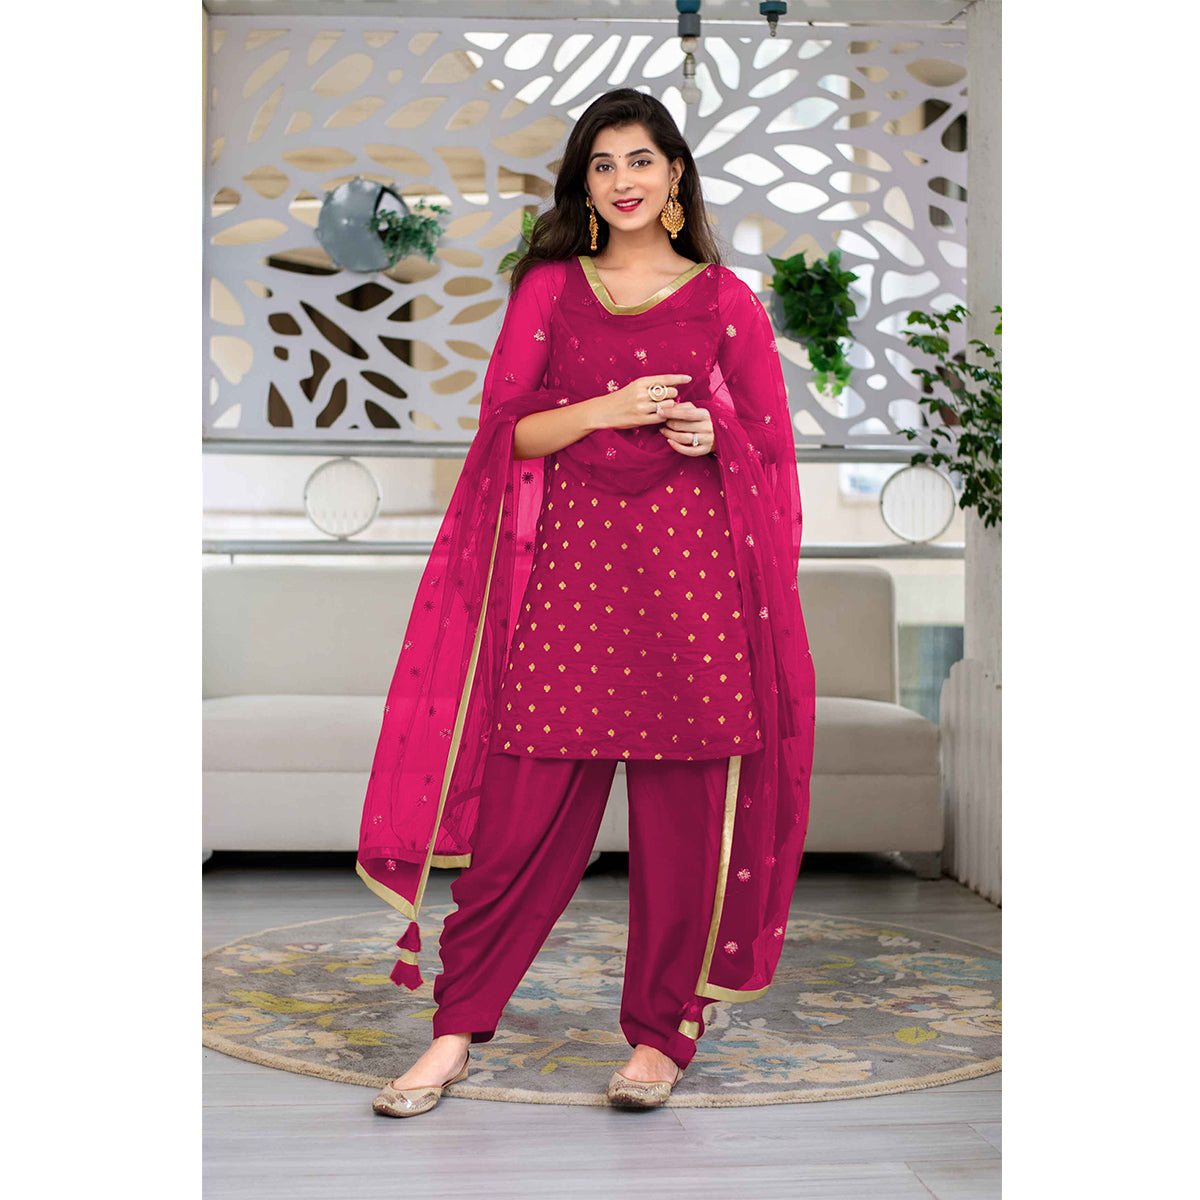 Shafnufab Women's Georgette UnStitched Dress Material Rani pink Salwar Suit